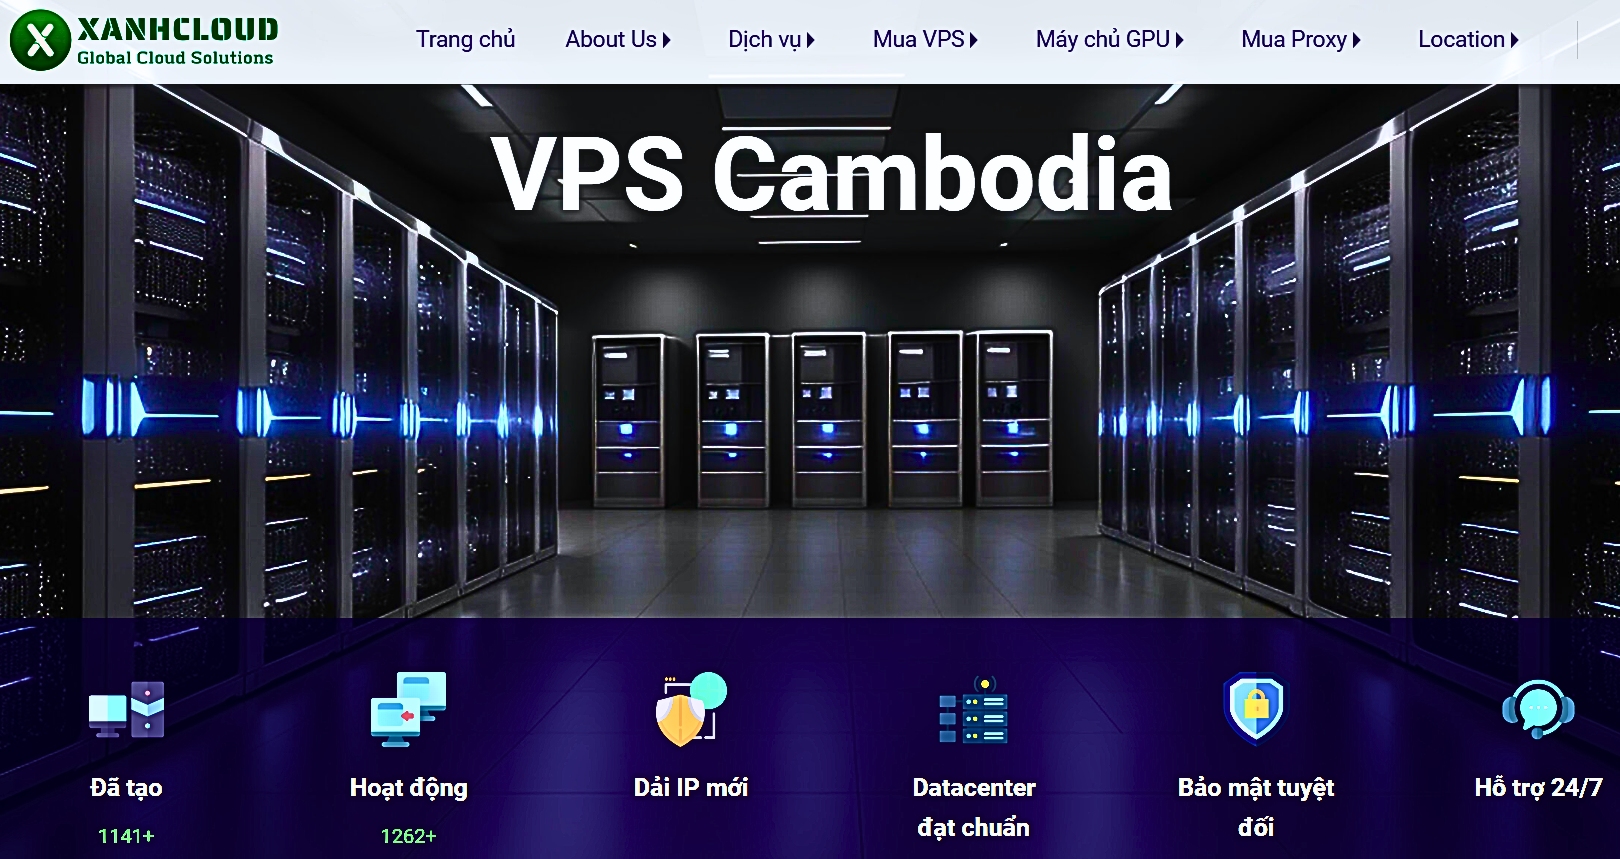 Giới Thiệu Về VPS Cambodia tại XanhCloud